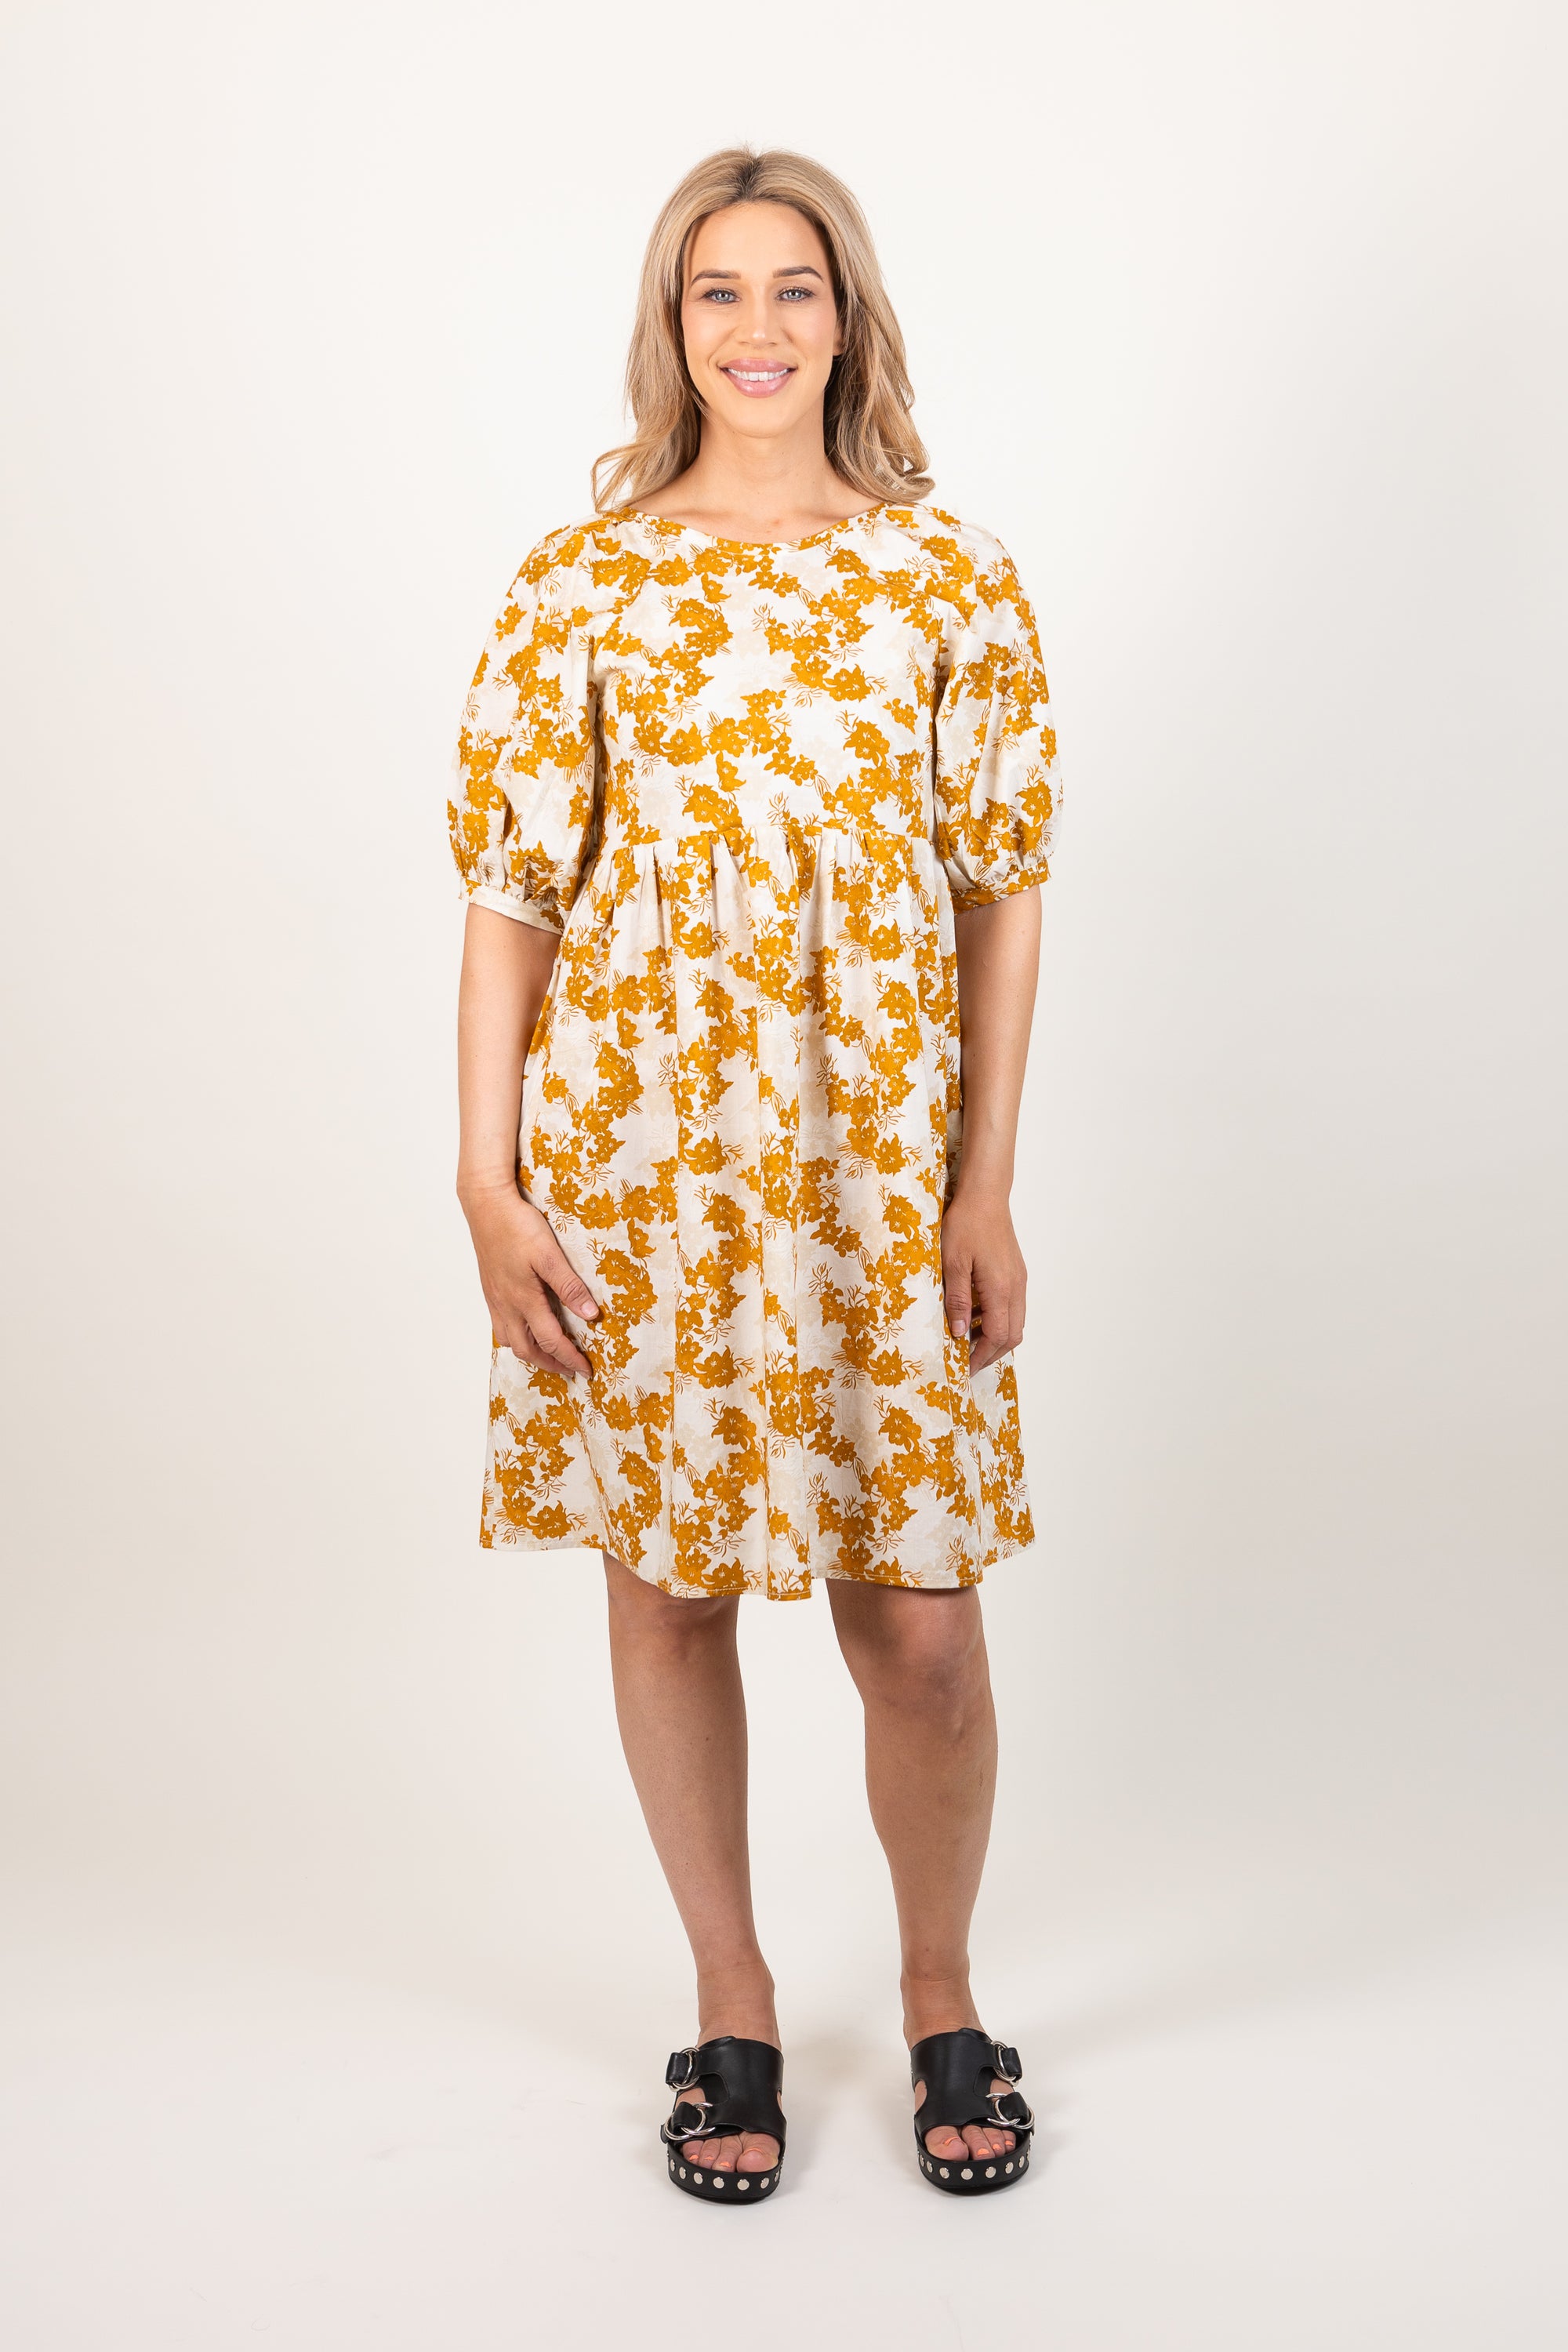 Ames Store Summer Cotton Dress Floral Print